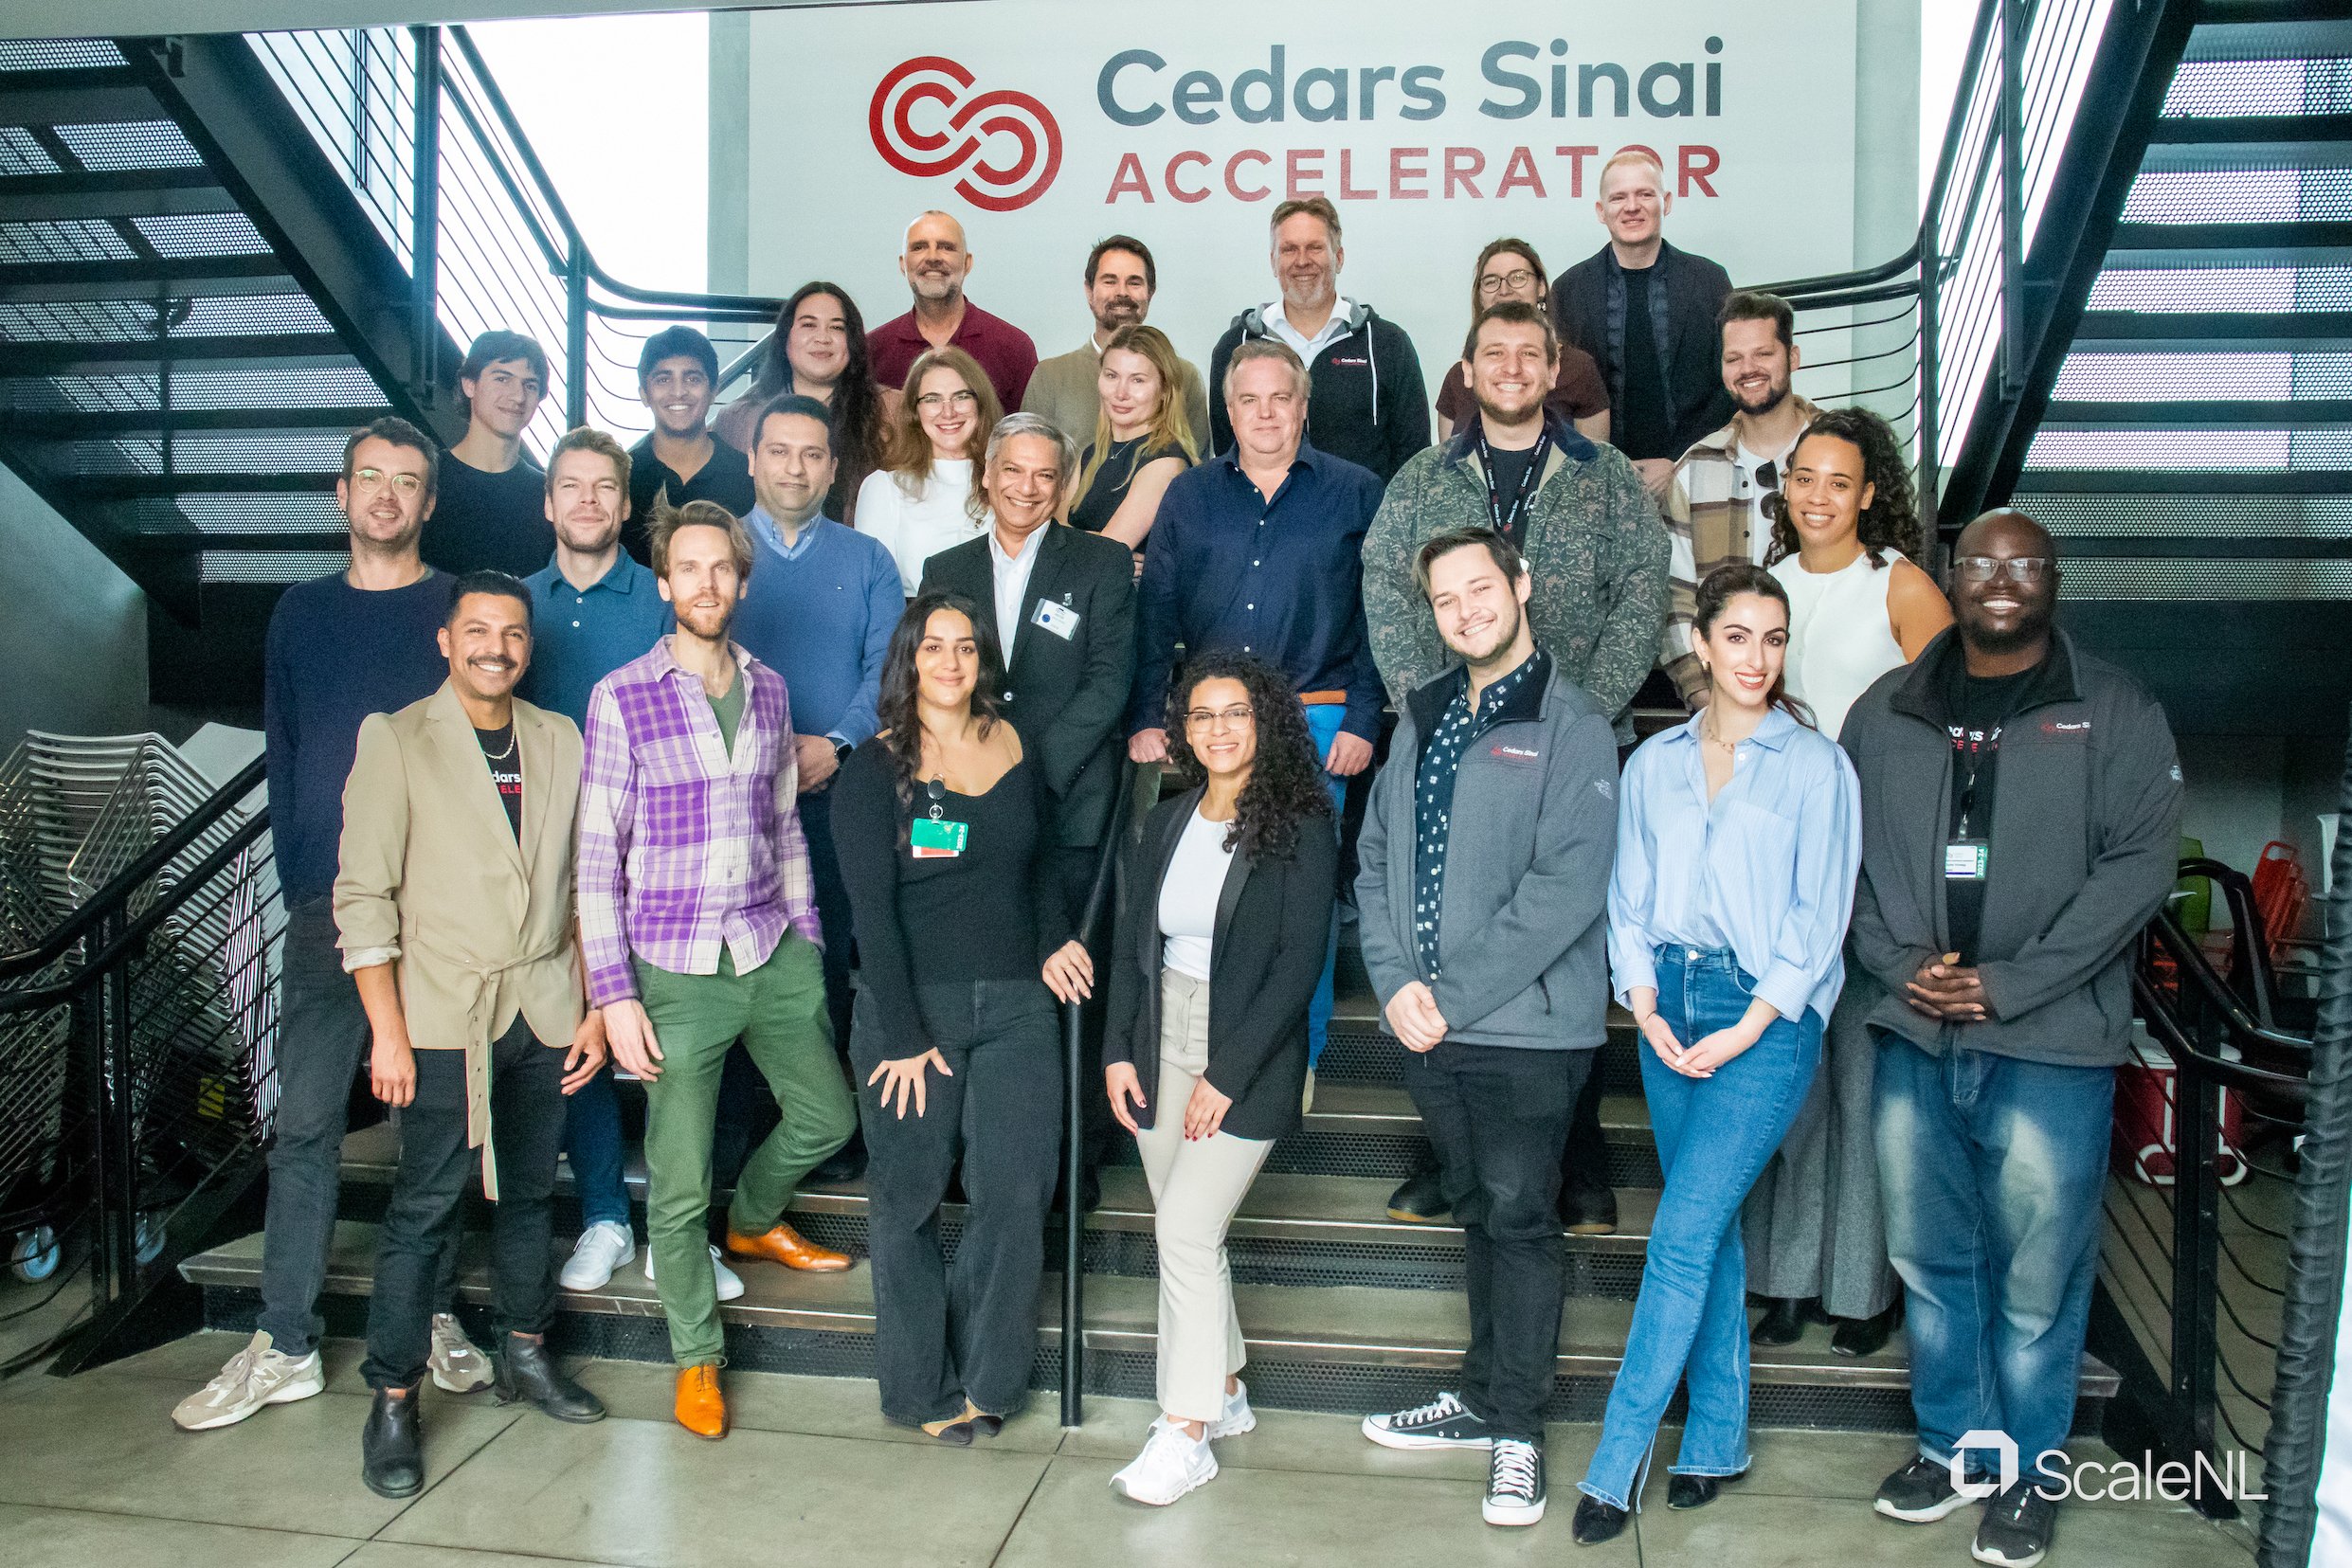 ScaleNL HealthTech Mini Accelerator cohort on the background of Cedars Sinai Accelerator staircase